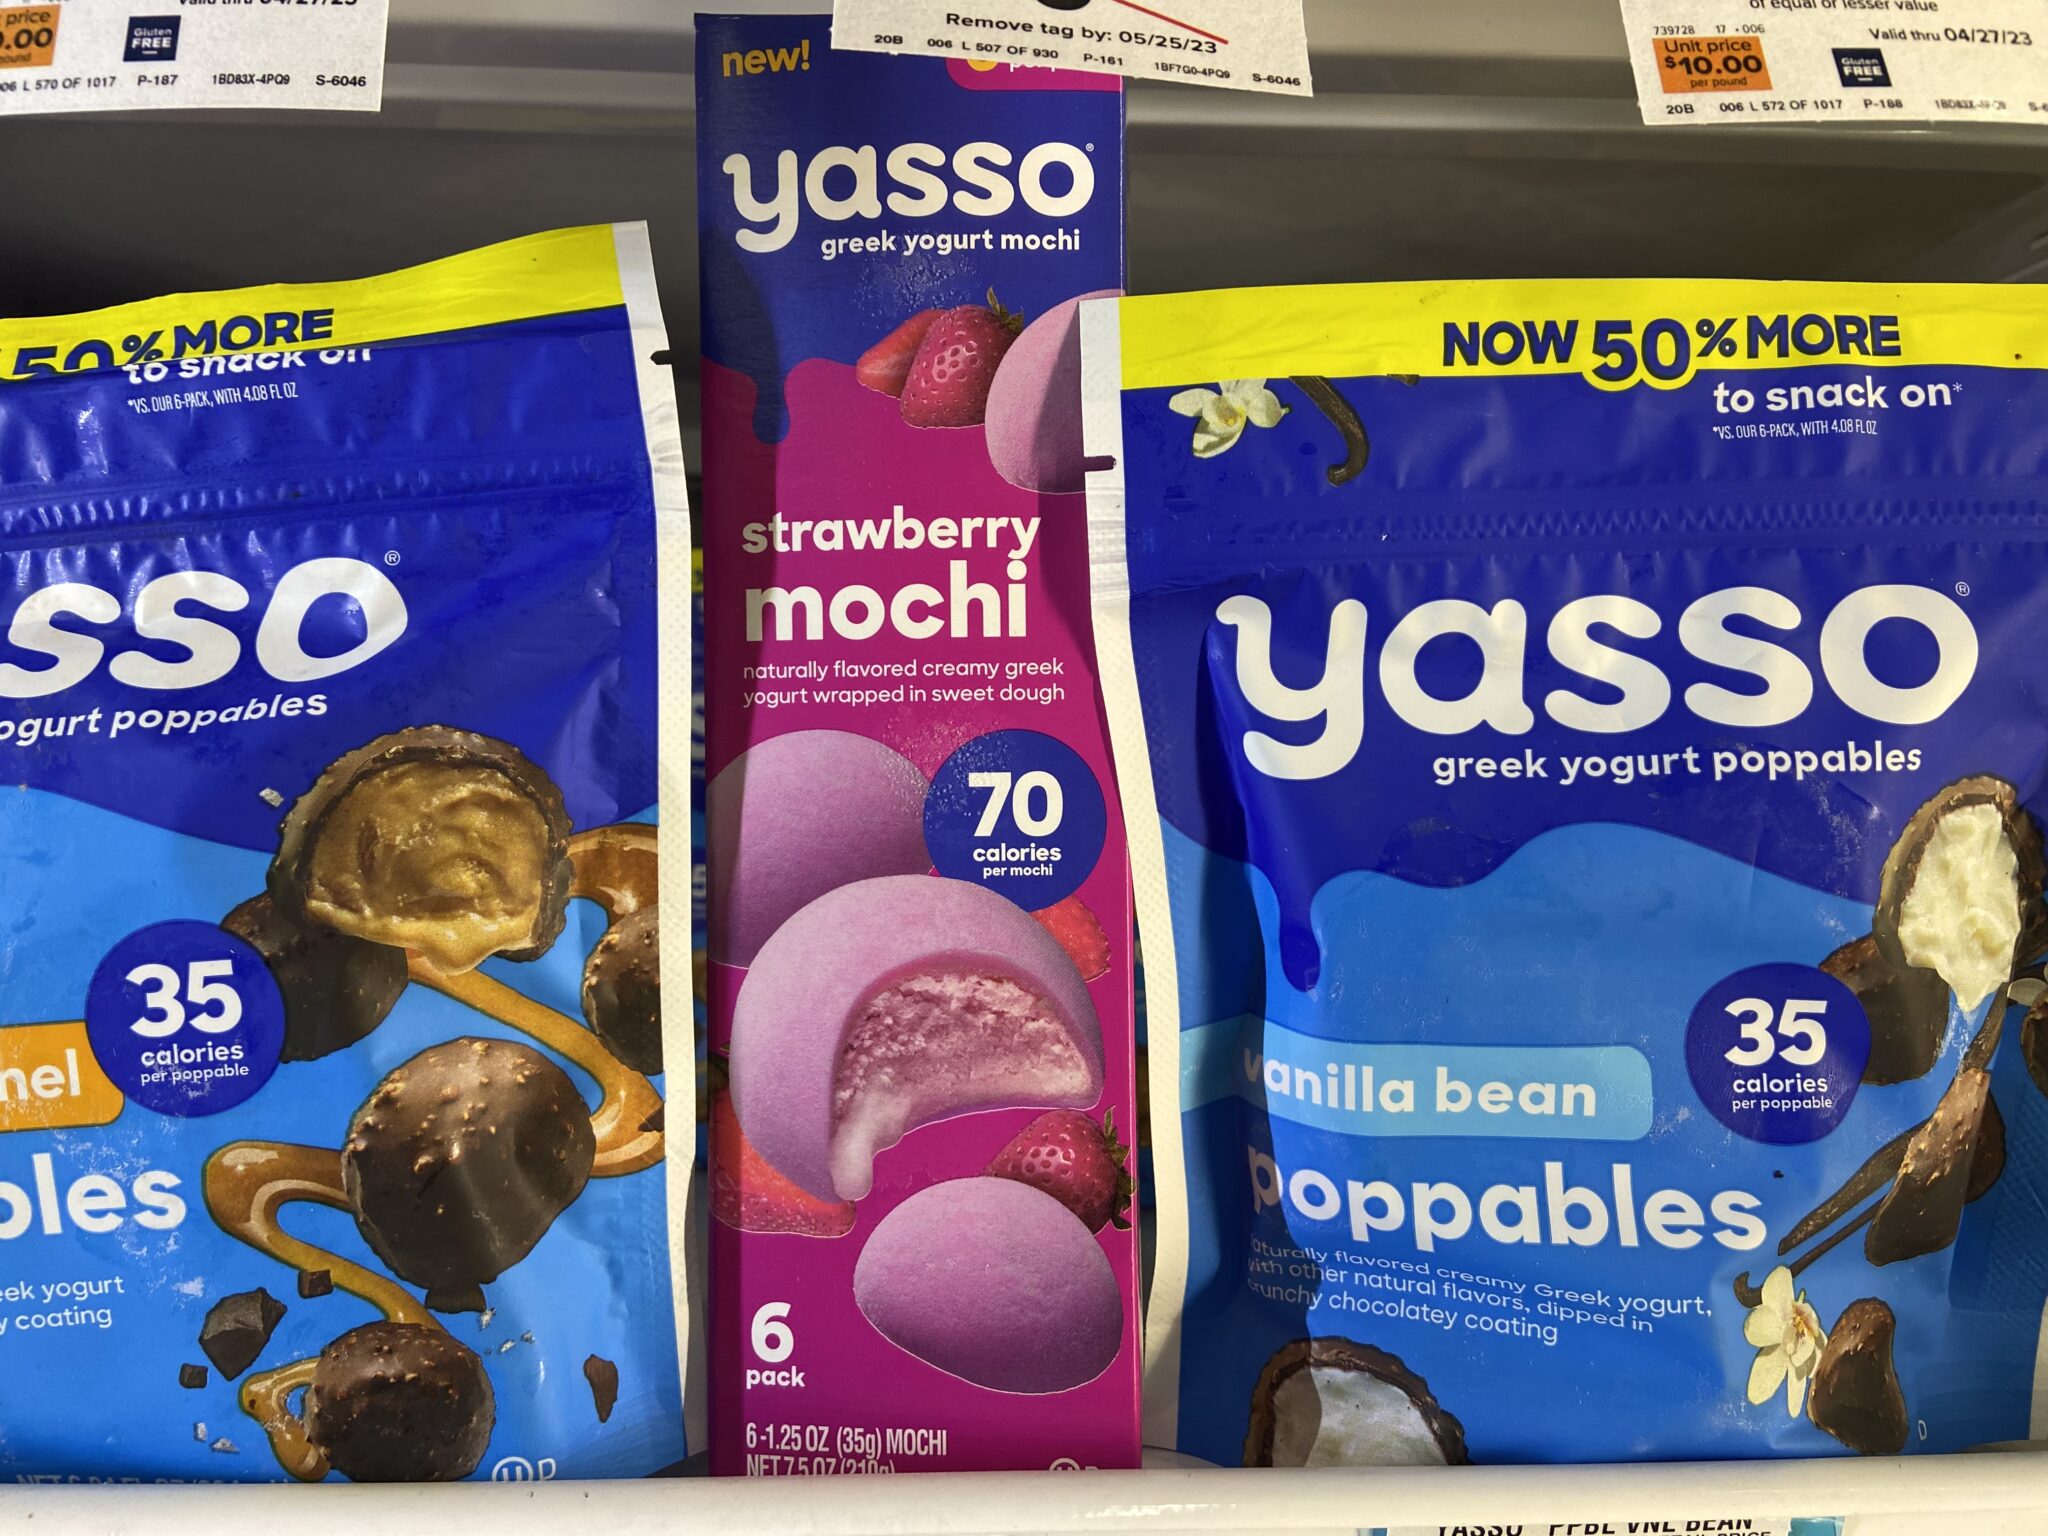 Rebate Deal at ShopRite On Yasso Greek Yogurt Poppables Thru 6/10